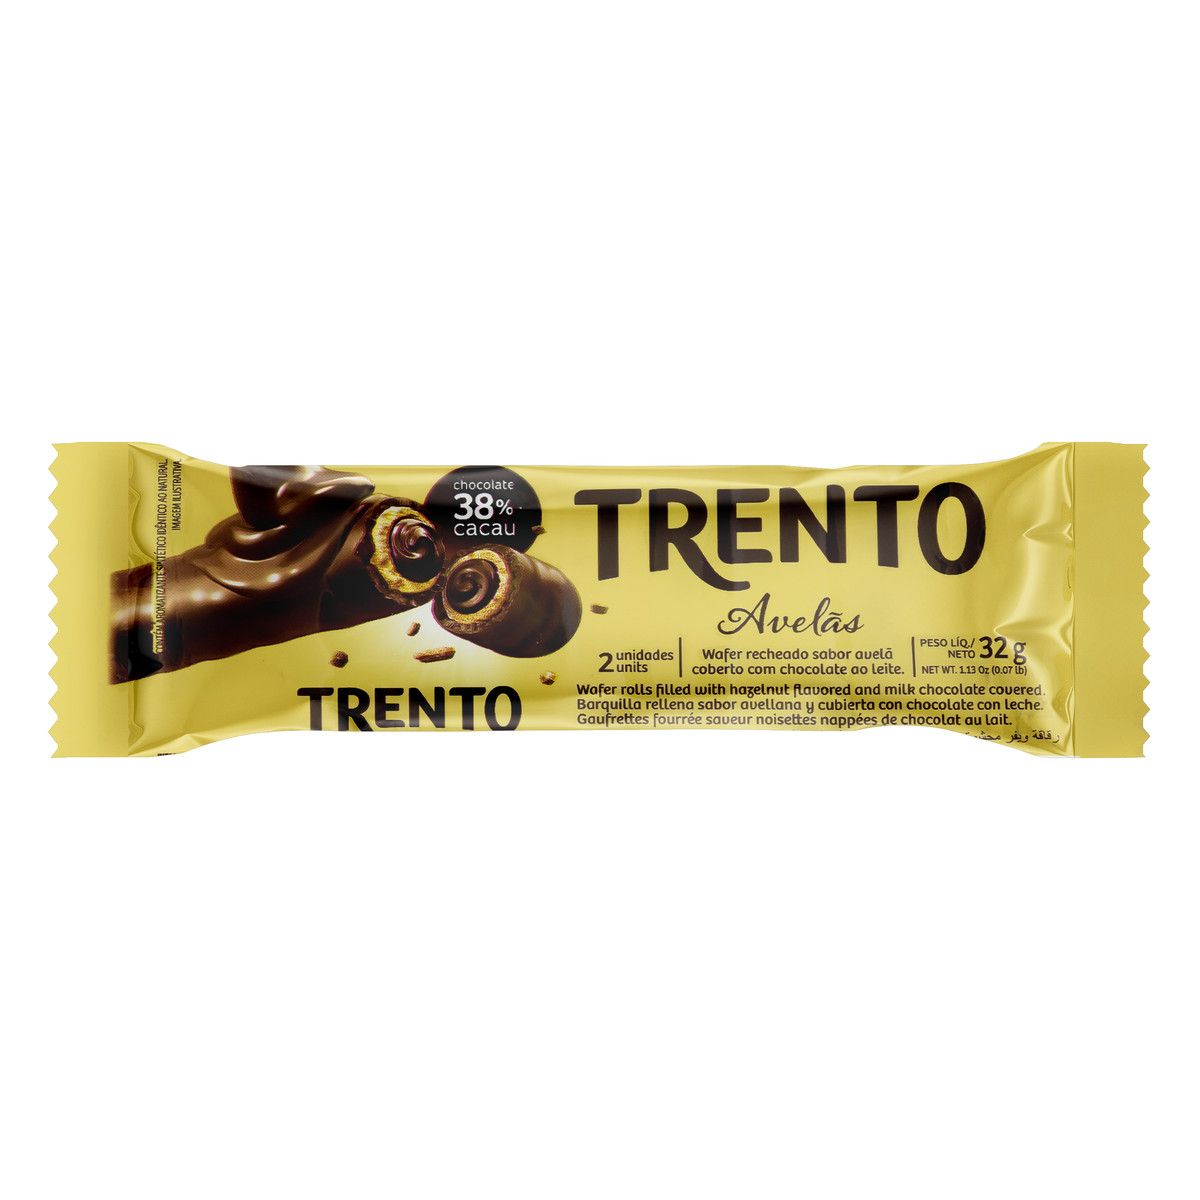 Chocolate Trento dark, 32g P7896306617492 - Trento Wafer Dark 32G - 2-TRENTO